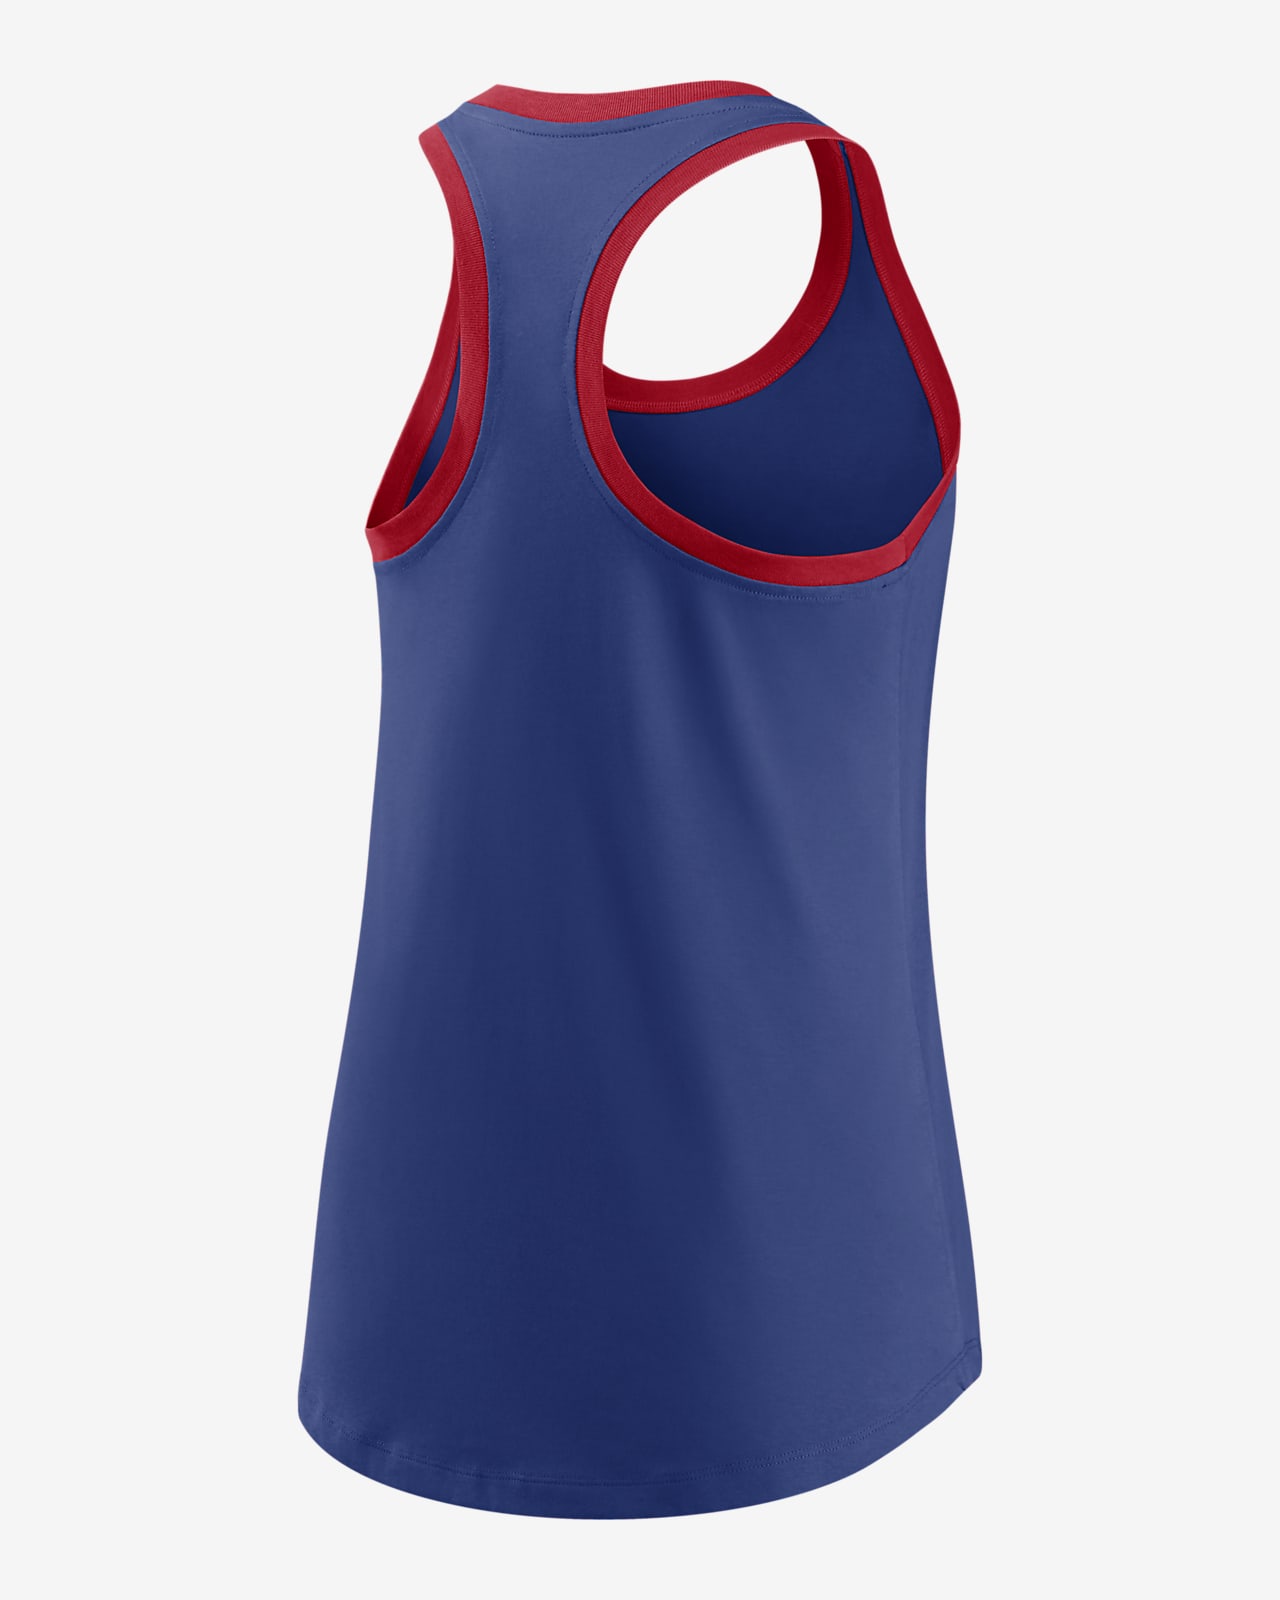 Nike Next Up (MLB Texas Rangers) Women's 3/4-Sleeve Top